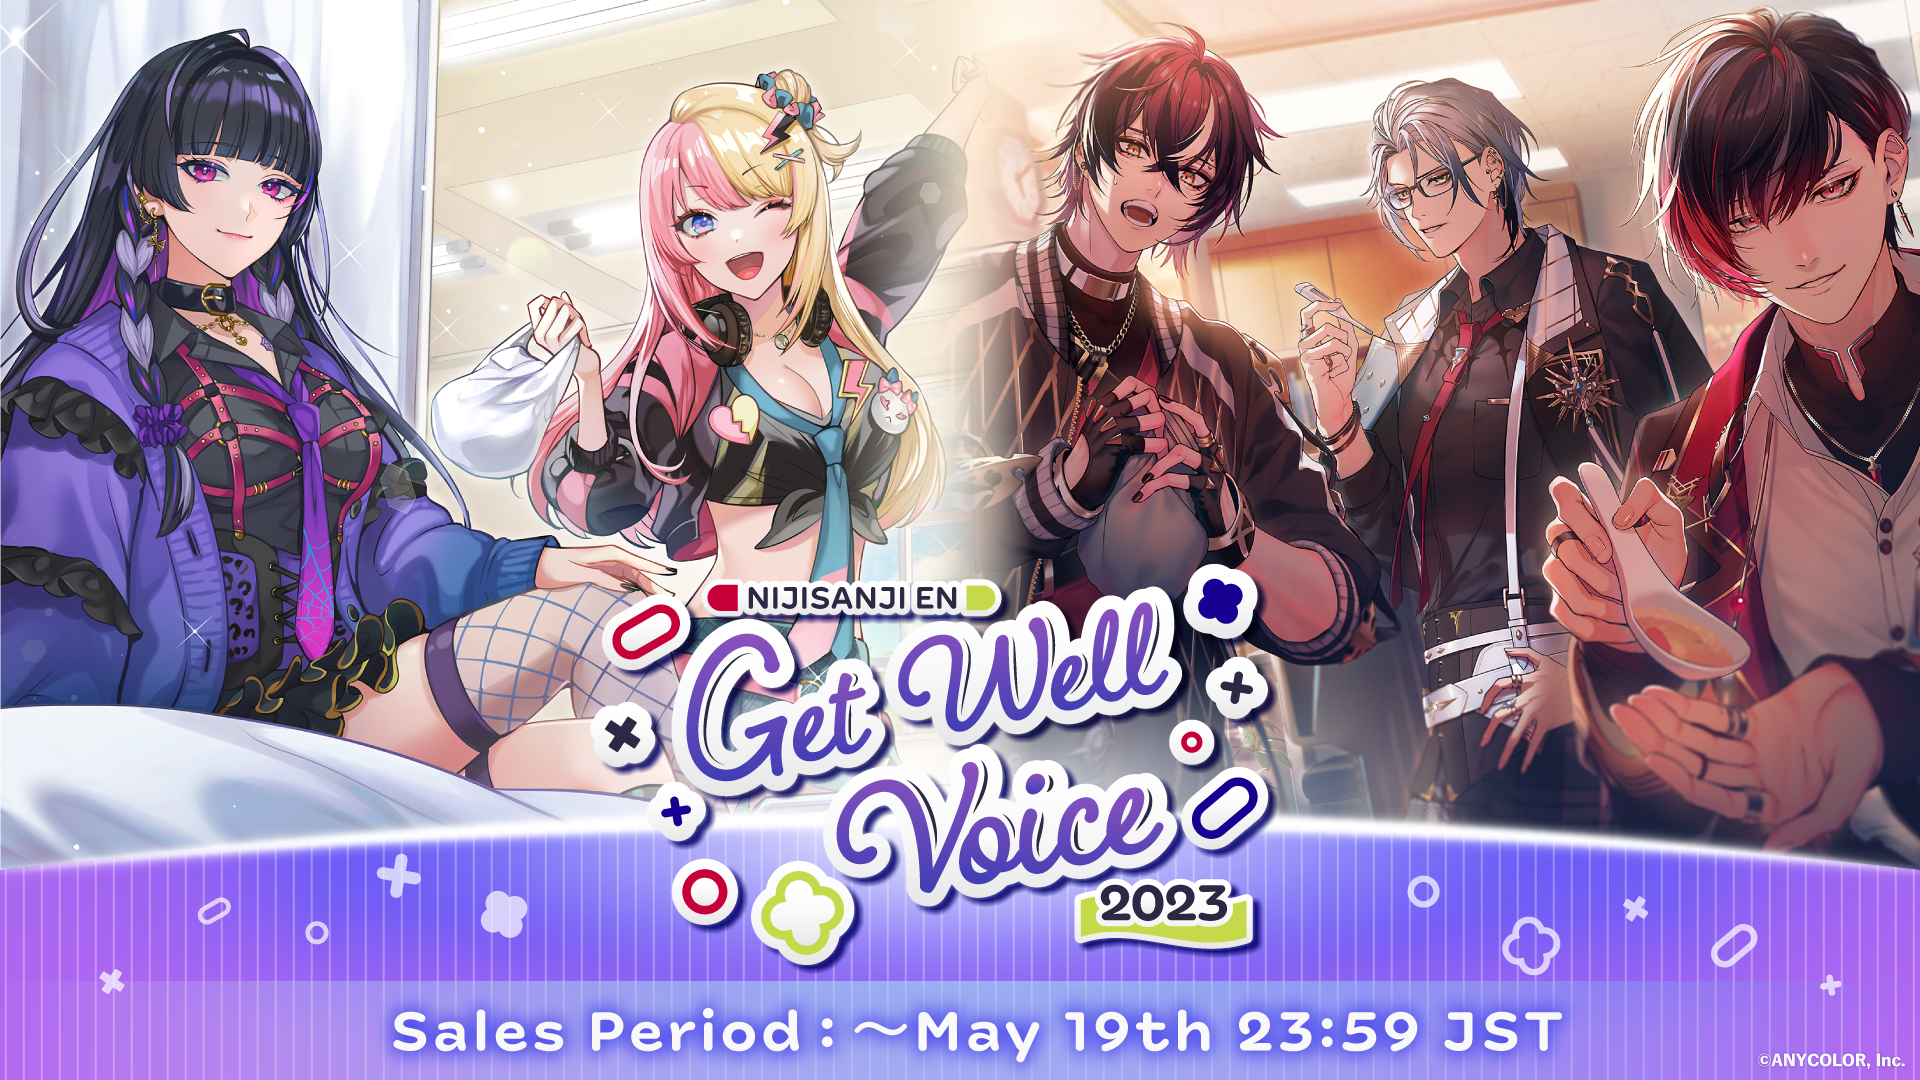 NIJISANJI EN announces “Get Well Voice 2023” | ANYCOLOR株式会社 